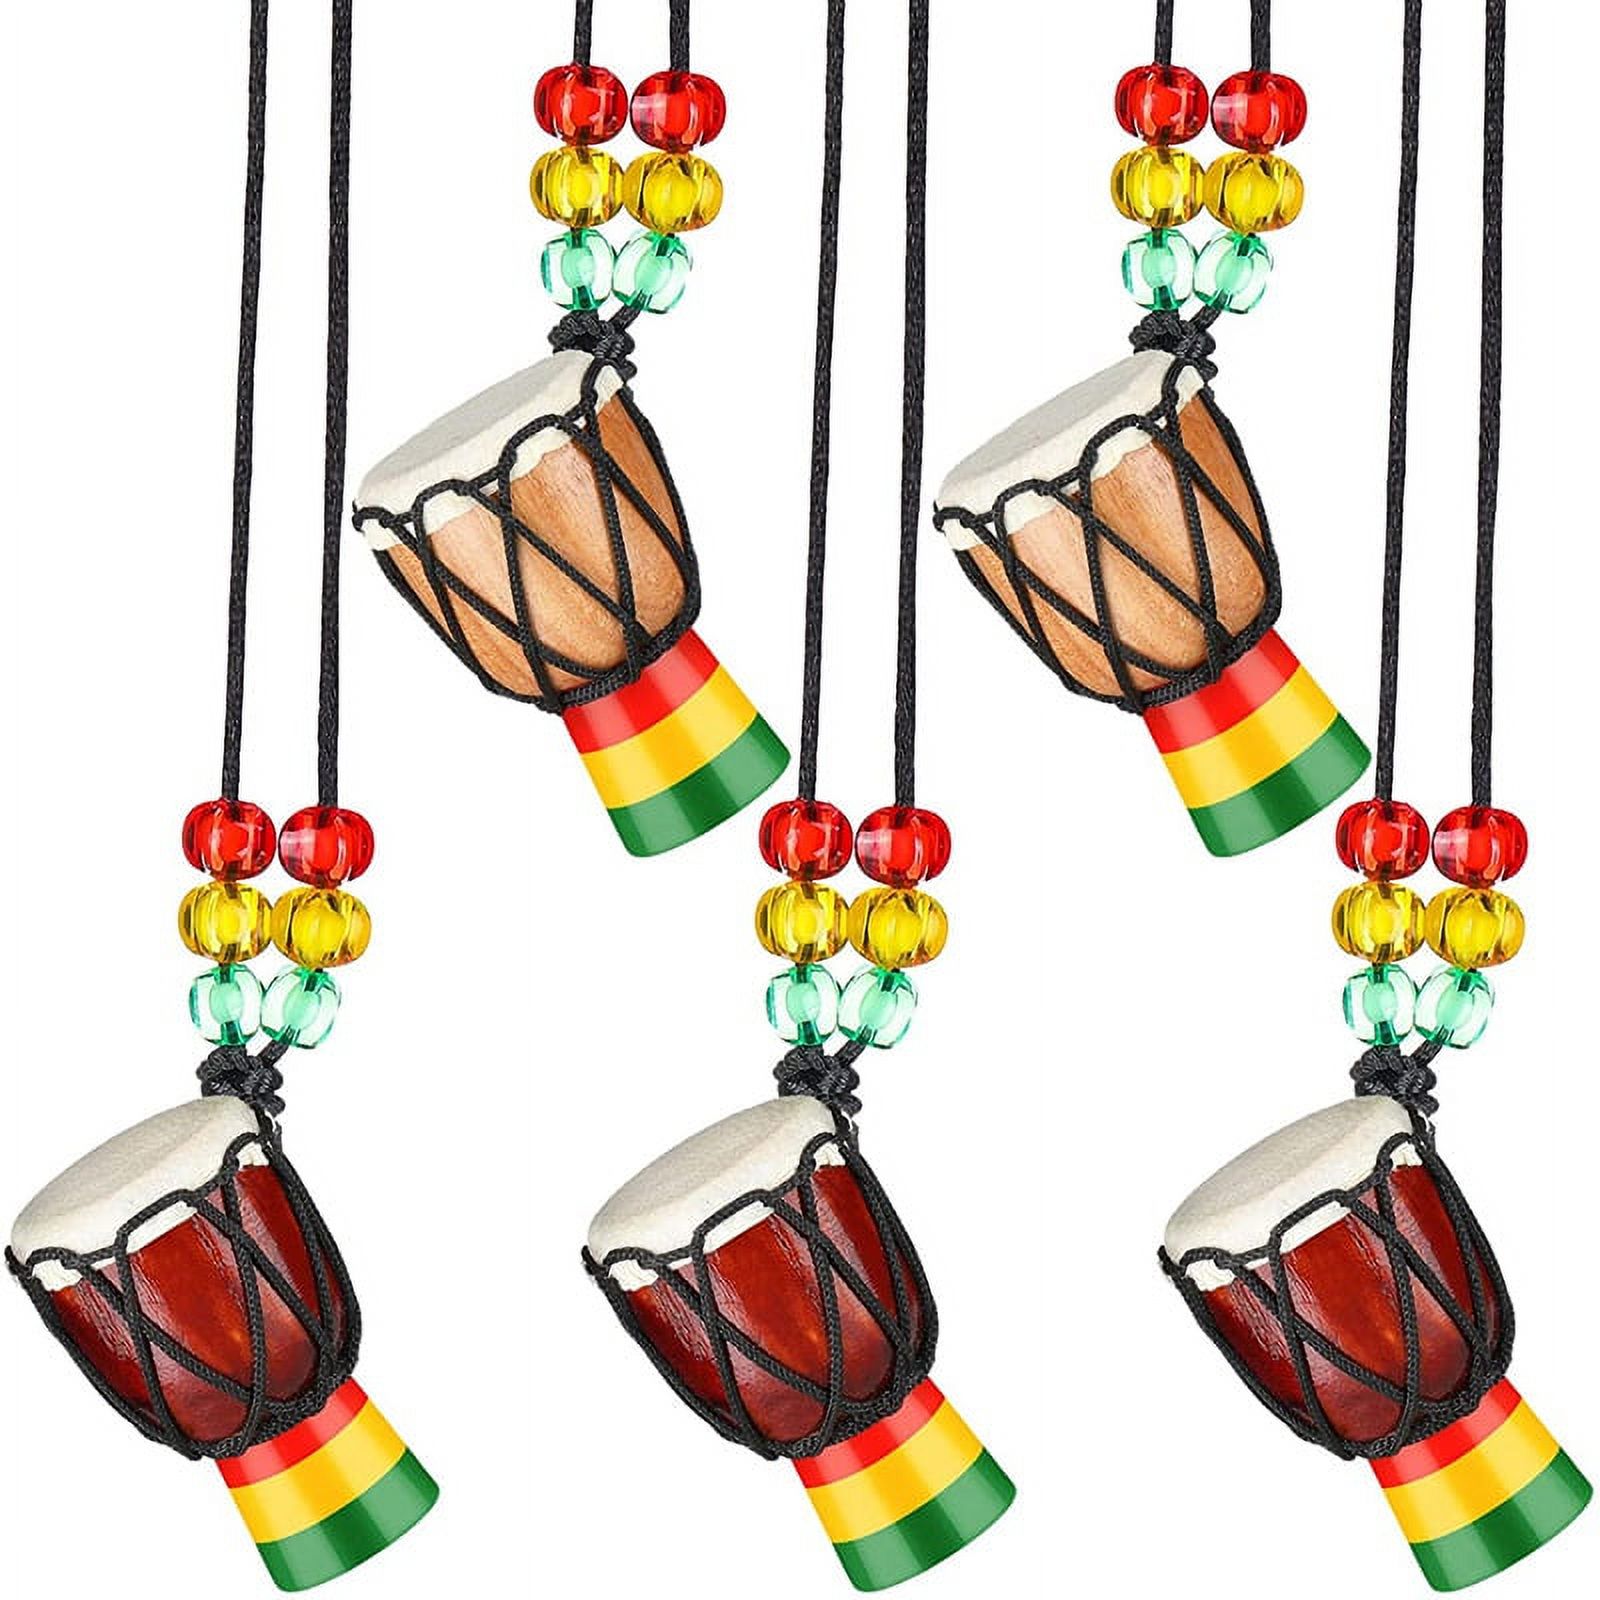 5 Pcs Instrument Necklaces Djembe Drum Mini Pendant African Drum - image 1 of 8